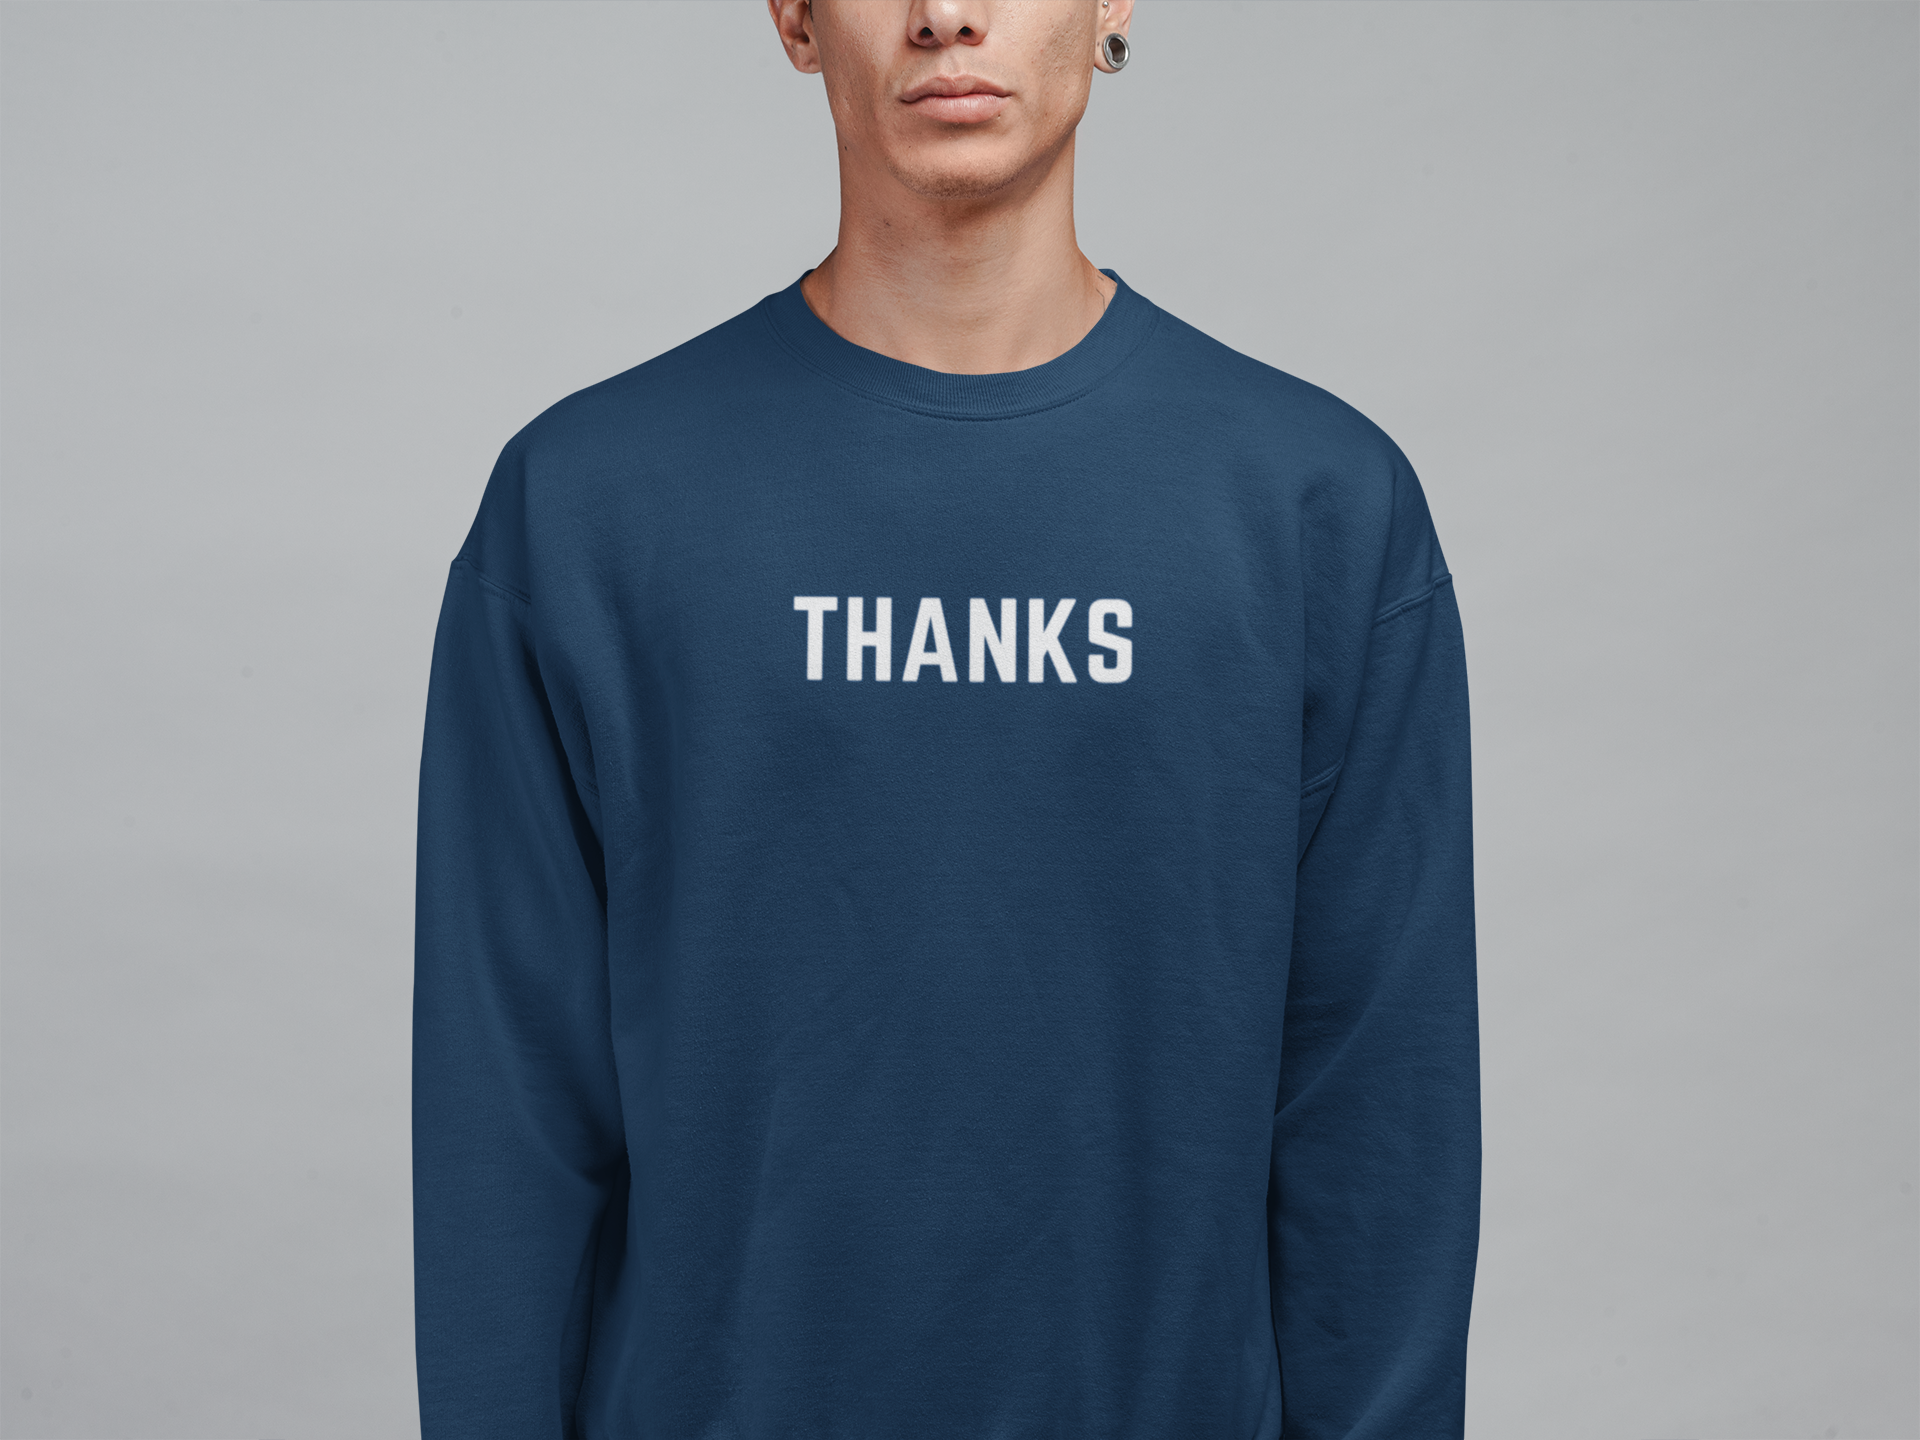 Thanks Sweatshirt